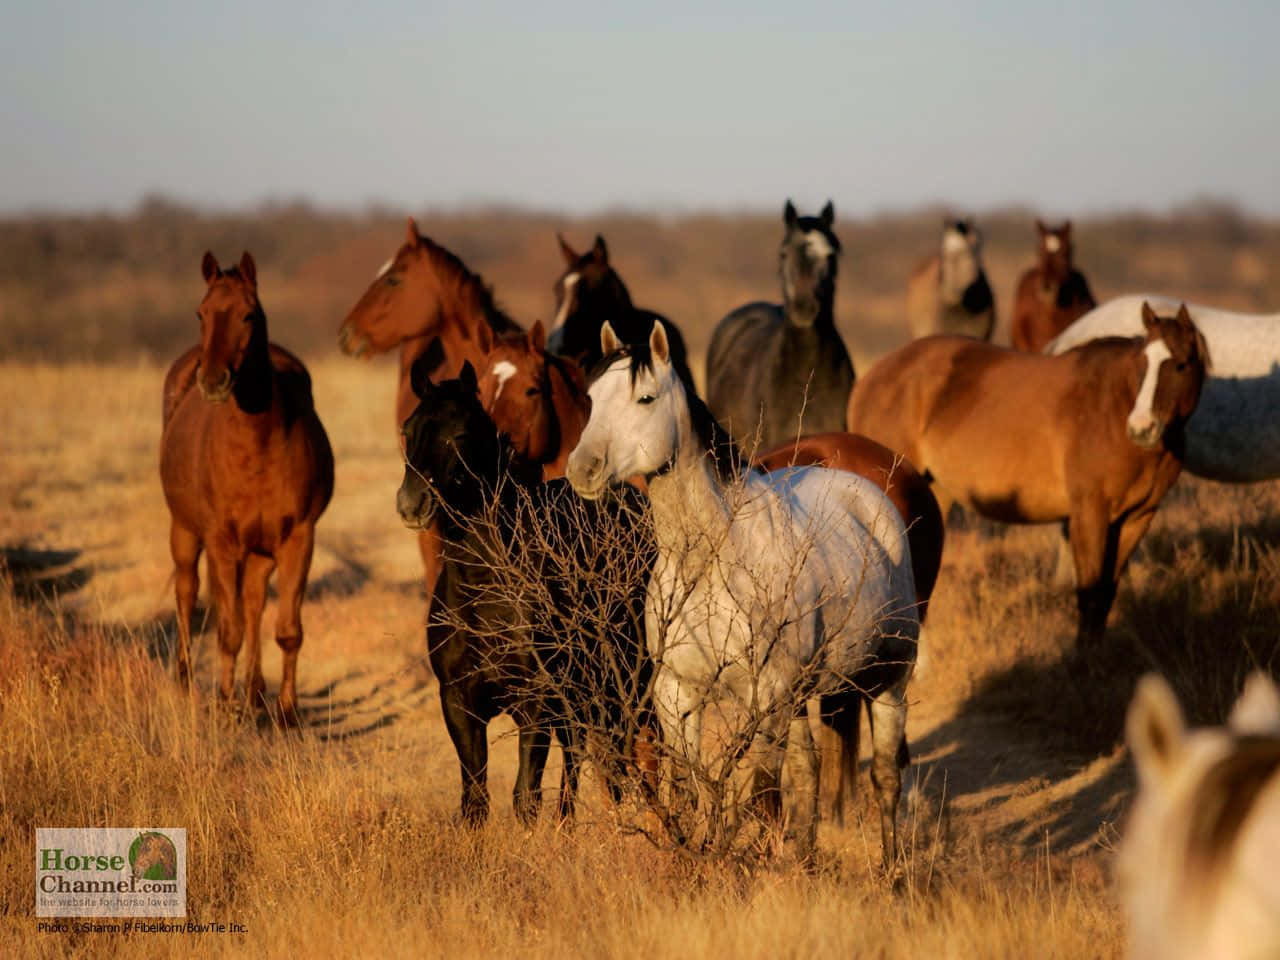 Imagende Un Grupo De Caballos Mustang De Pie En Un Campo Seco